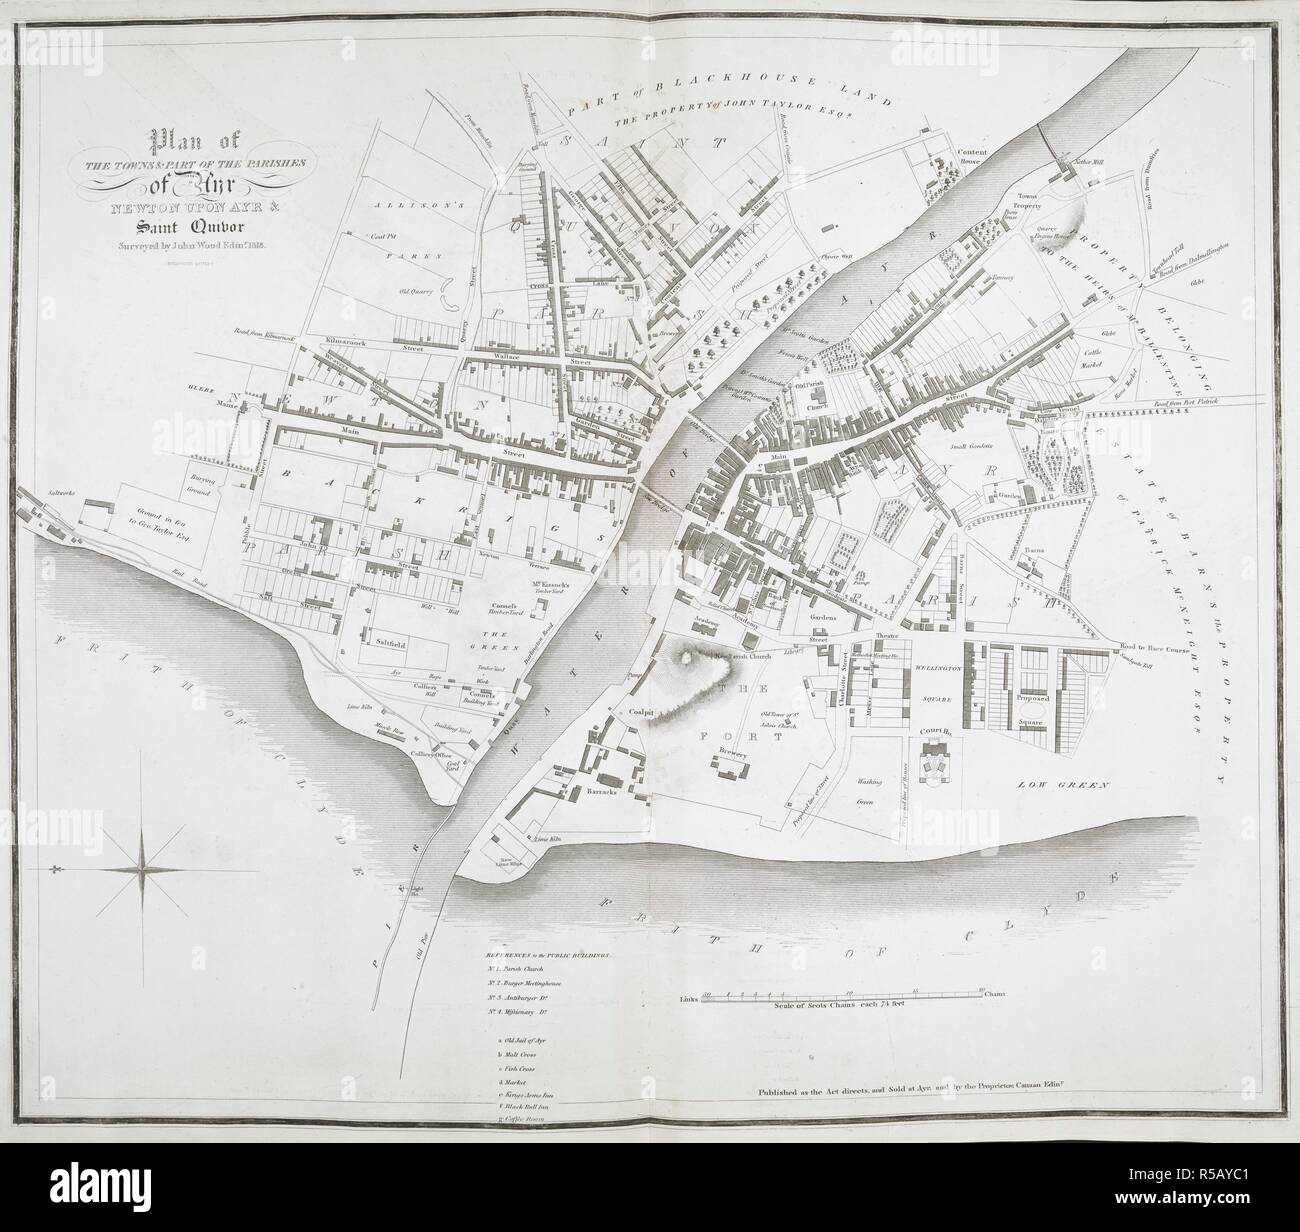 A plan of Ayr. Wood's Town Atlas. [Edinburgh] : [John Wood], [1828]. Source: Maps C.21.e.4. Language: English. Stock Photo